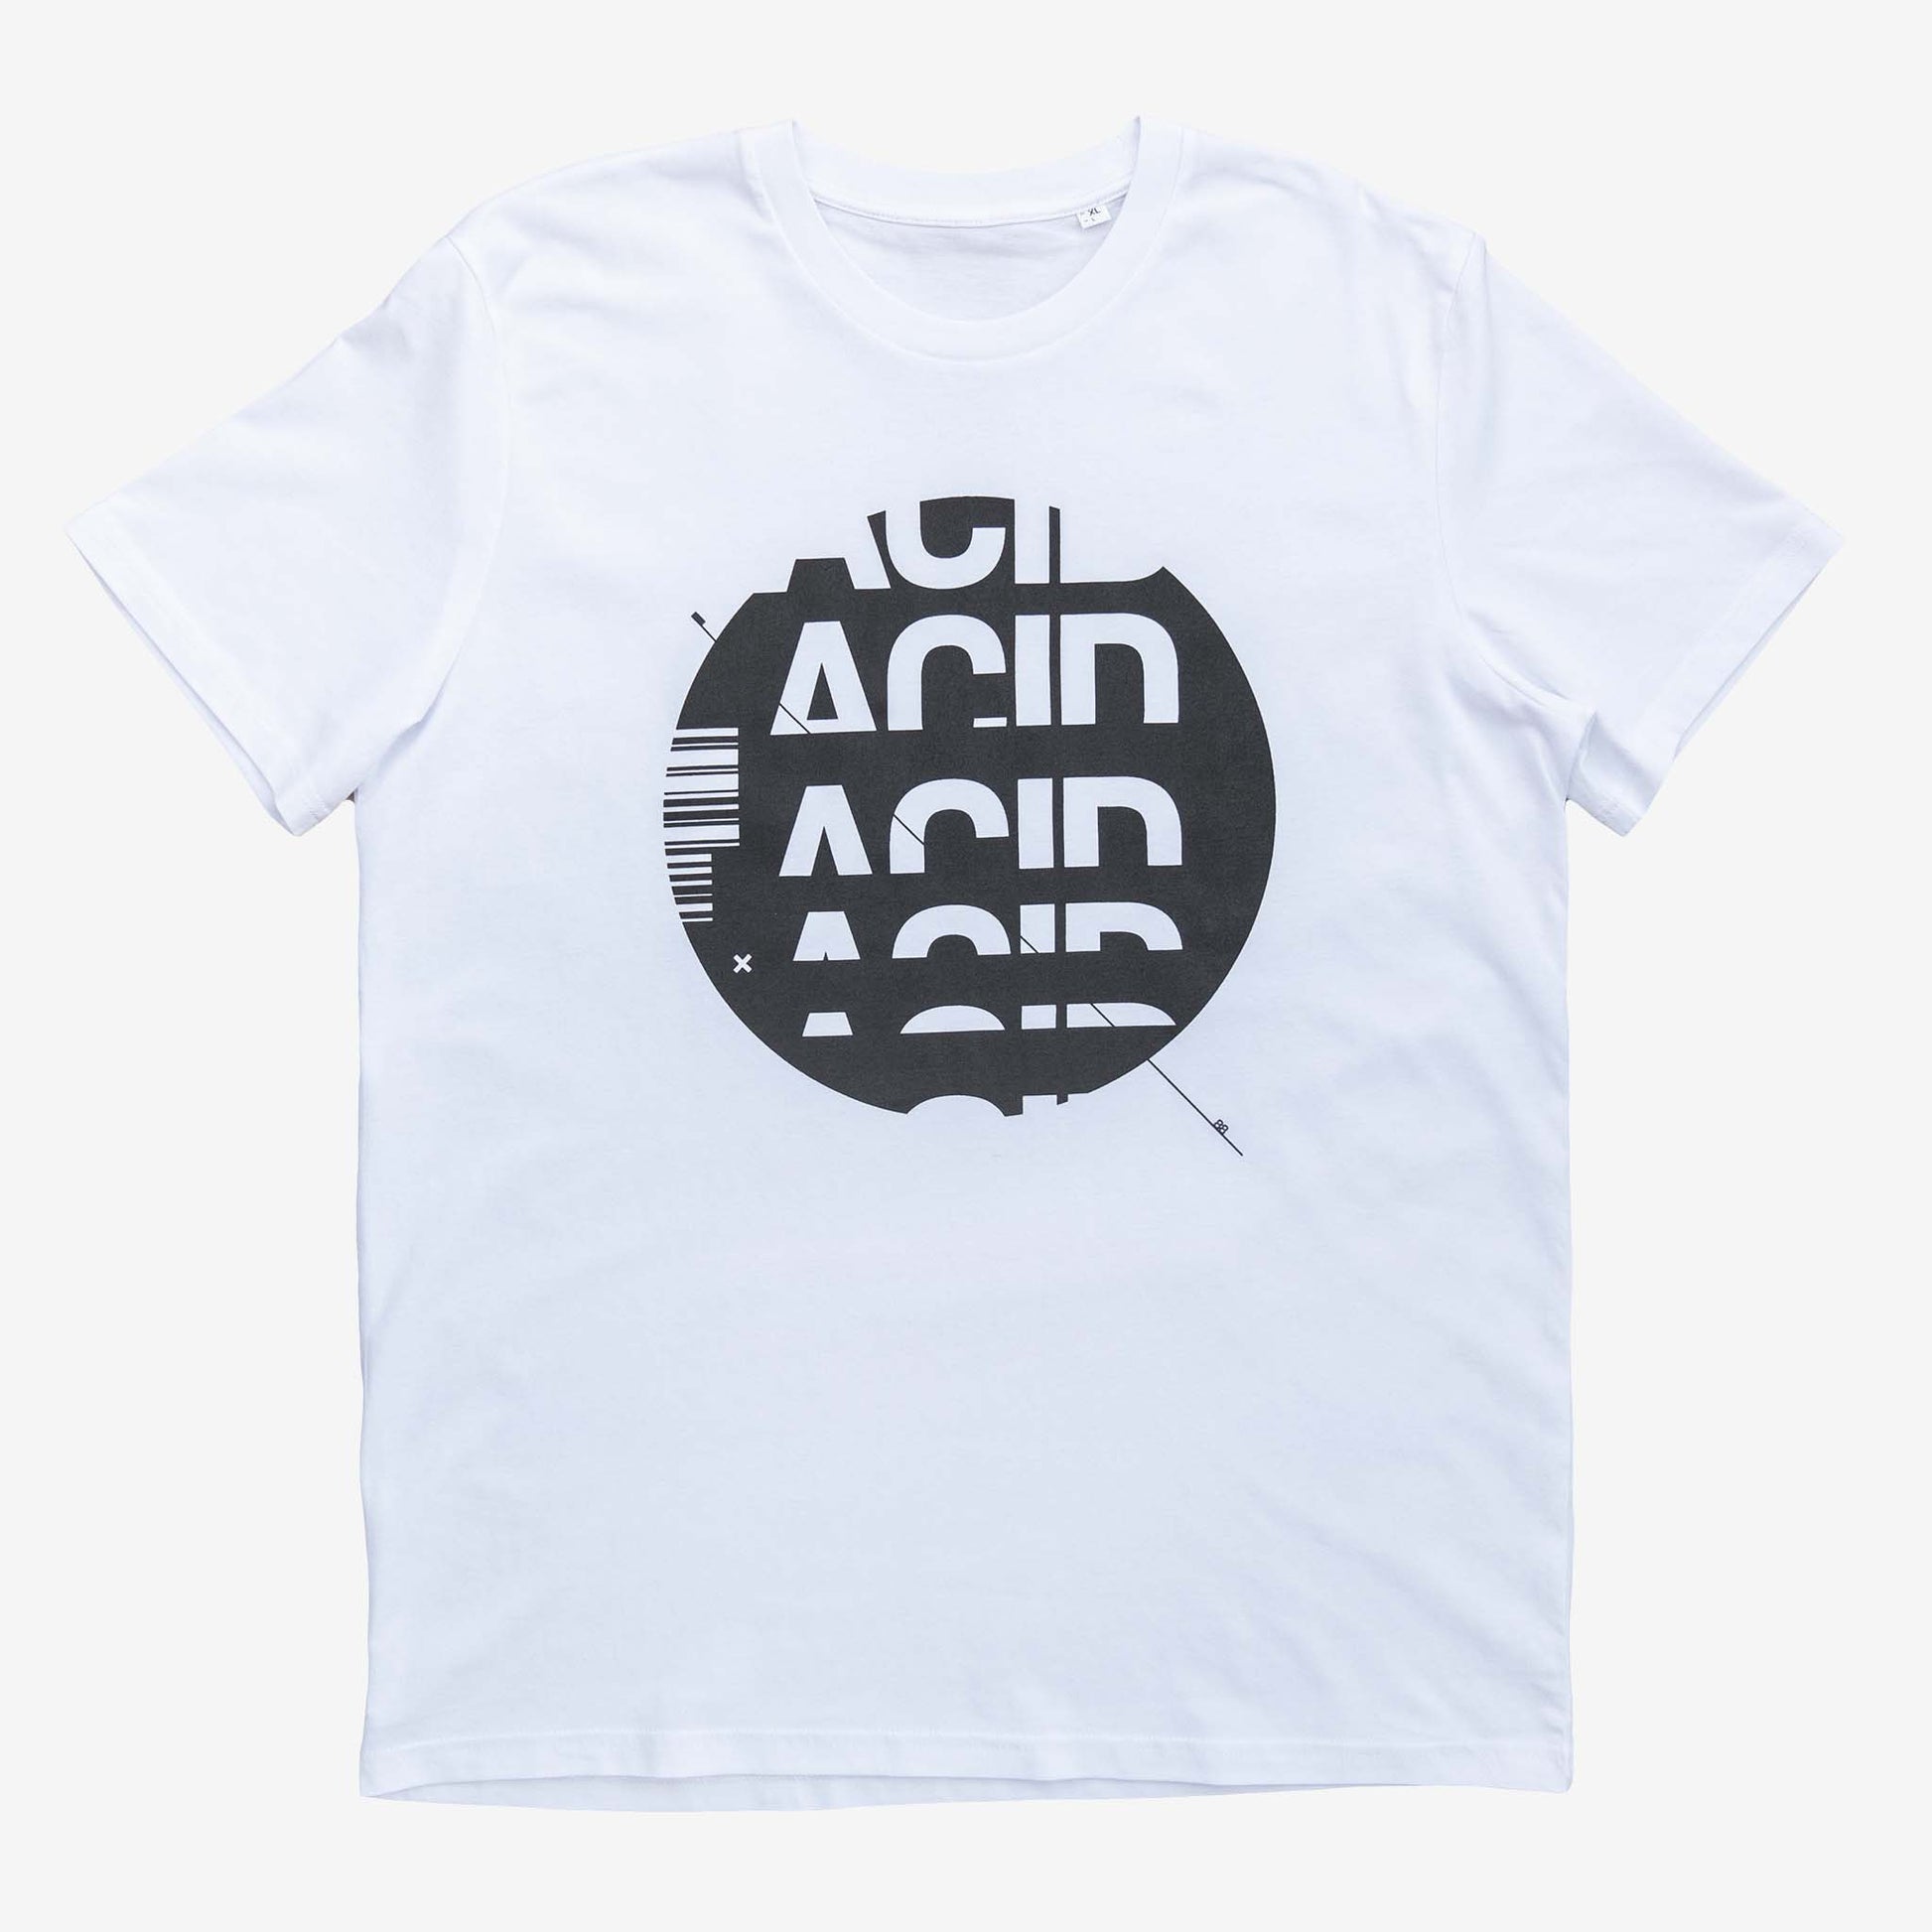 Acid house music lovers tshirt white